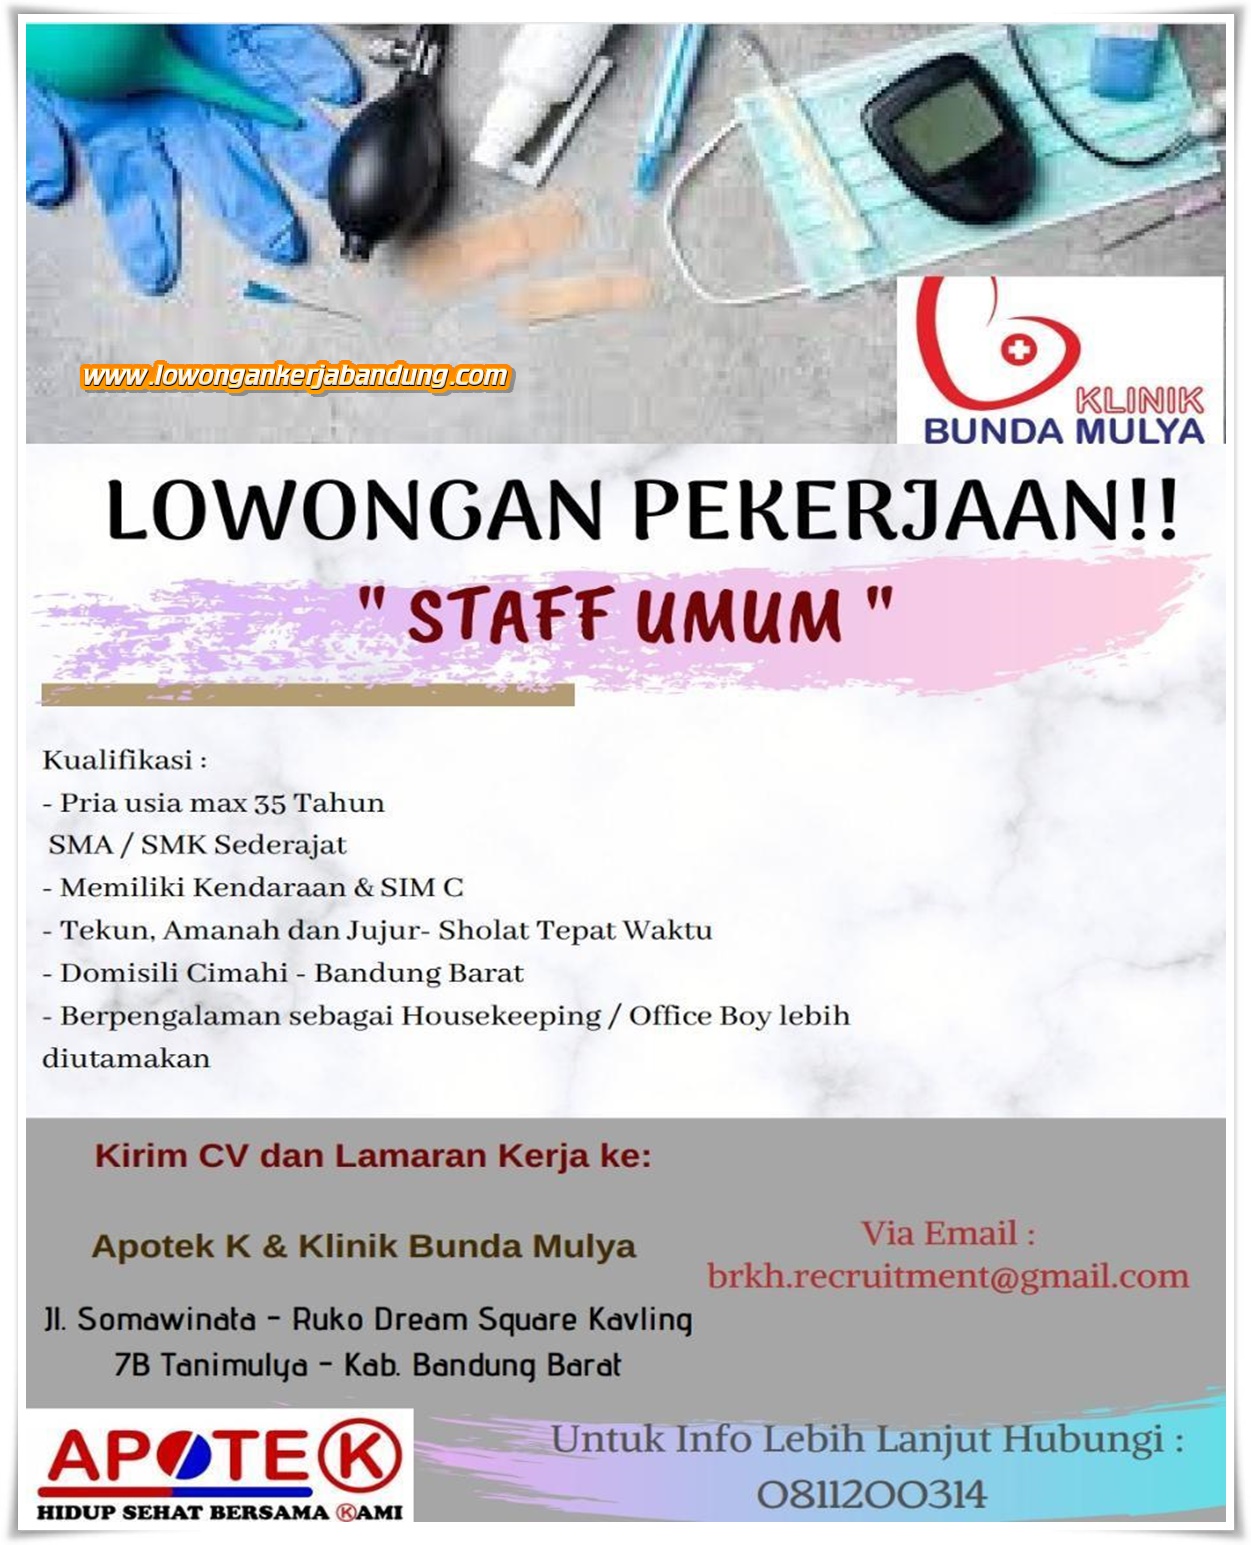 Lowongan Kerja Bandung Staff Umum Klinik Bunda Mulya - Lowongan Kerja